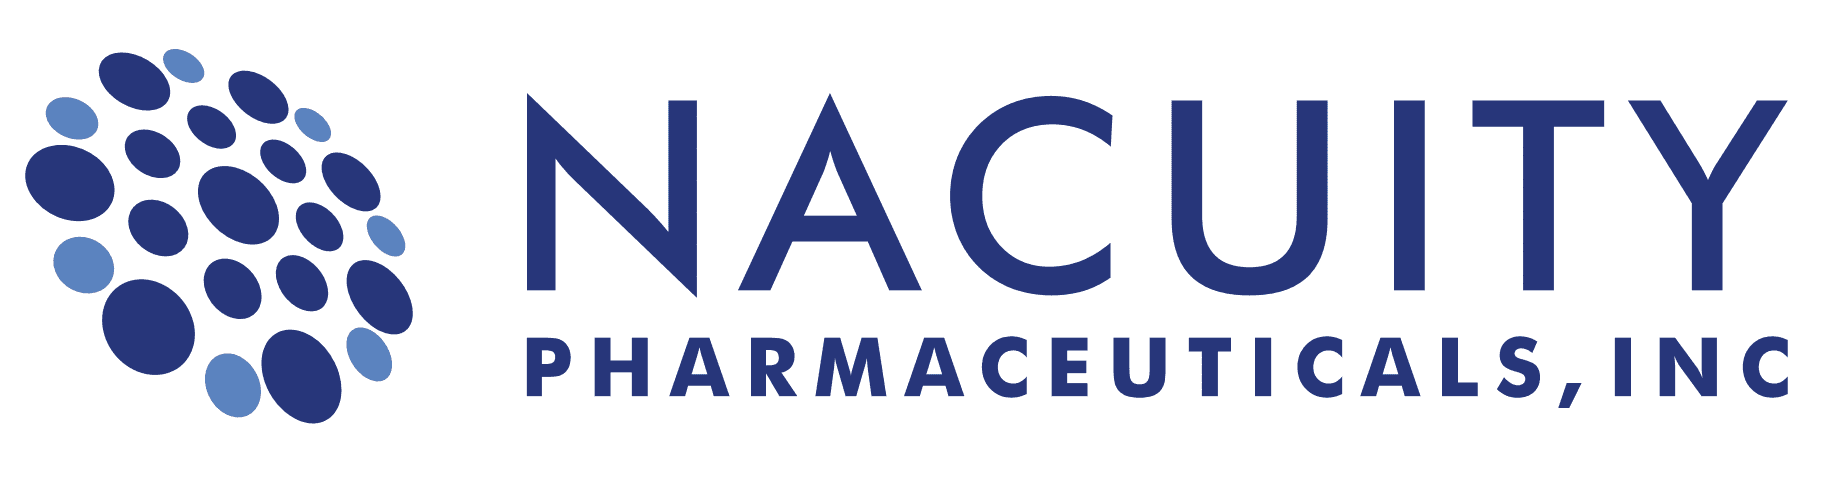 Nacuity Pharmaceuticals